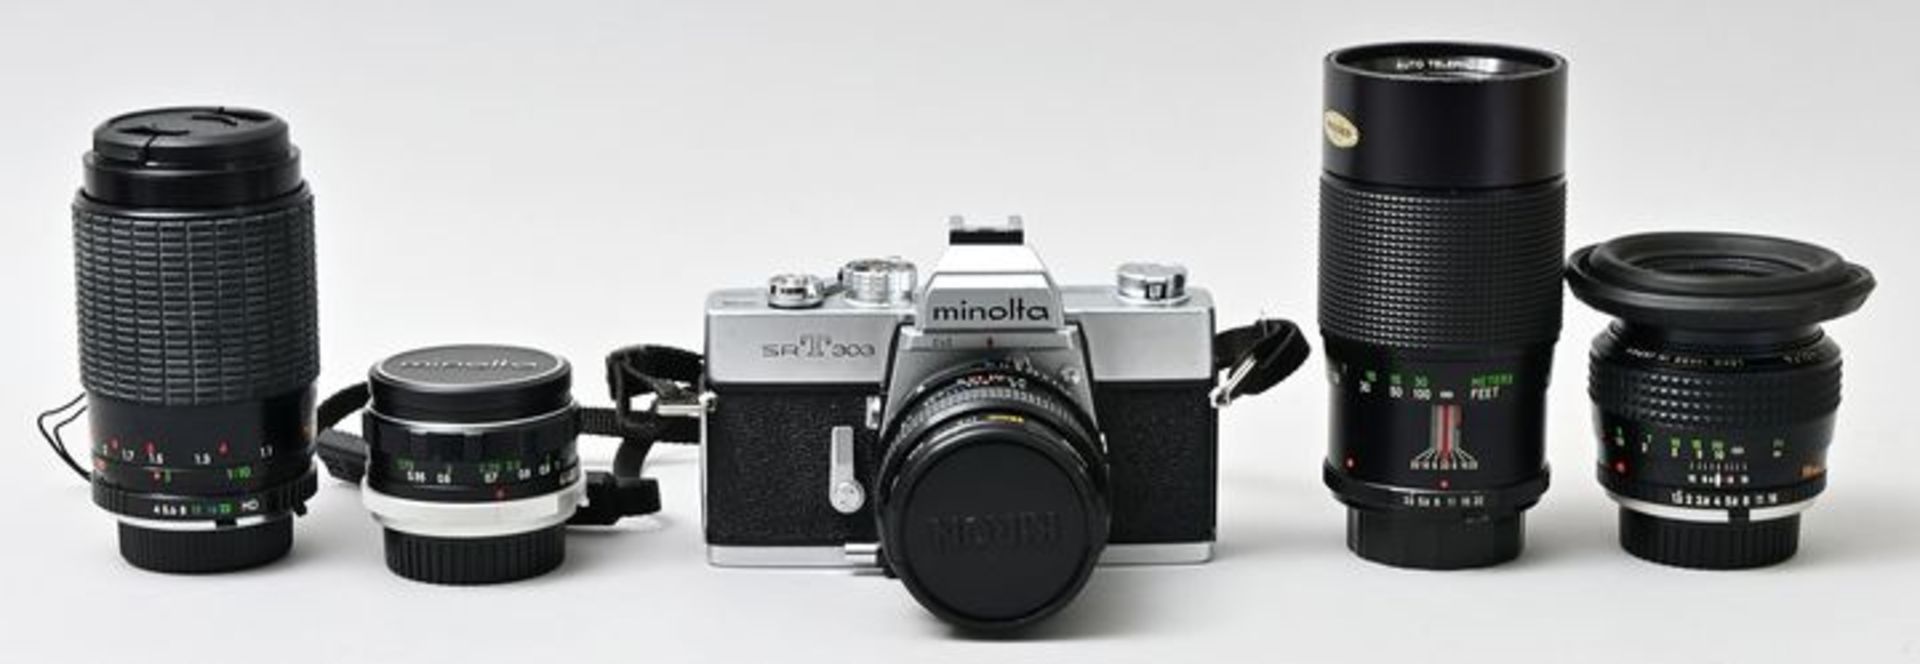 Spiegelreflex-Kamera Minolta/ camera